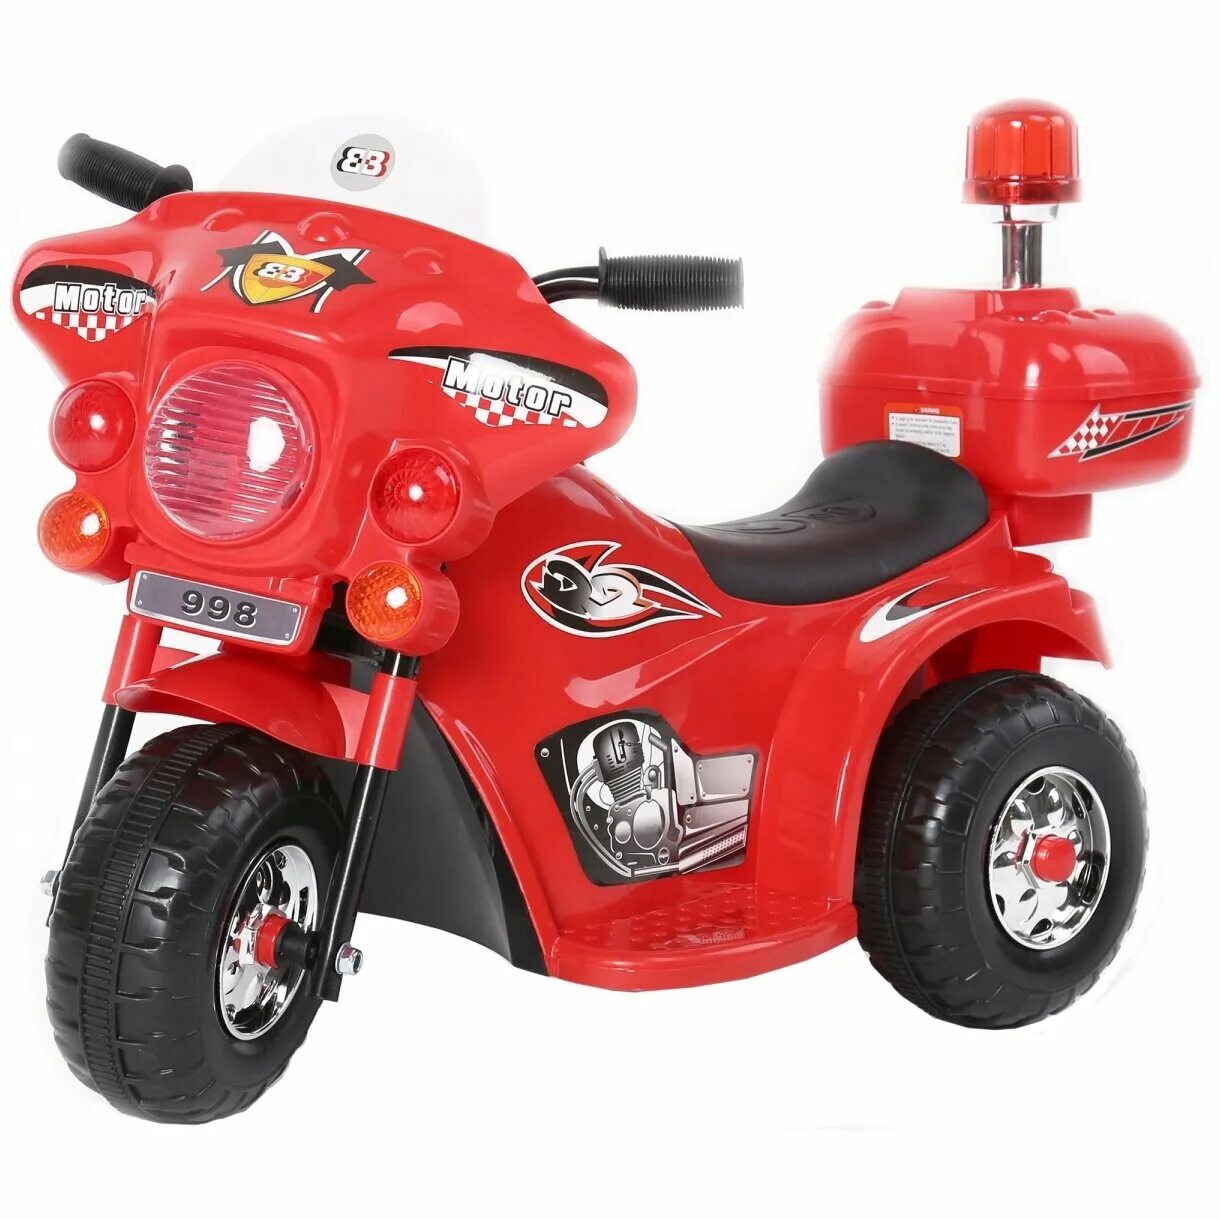 Электро для детей. RIVERTOYS трицикл Moto 998. RIVERTOYS Moto 998 красный. Мотоцикл RIVERTOYS Moto 998. Электромотоцикл Ocie 8480020a.